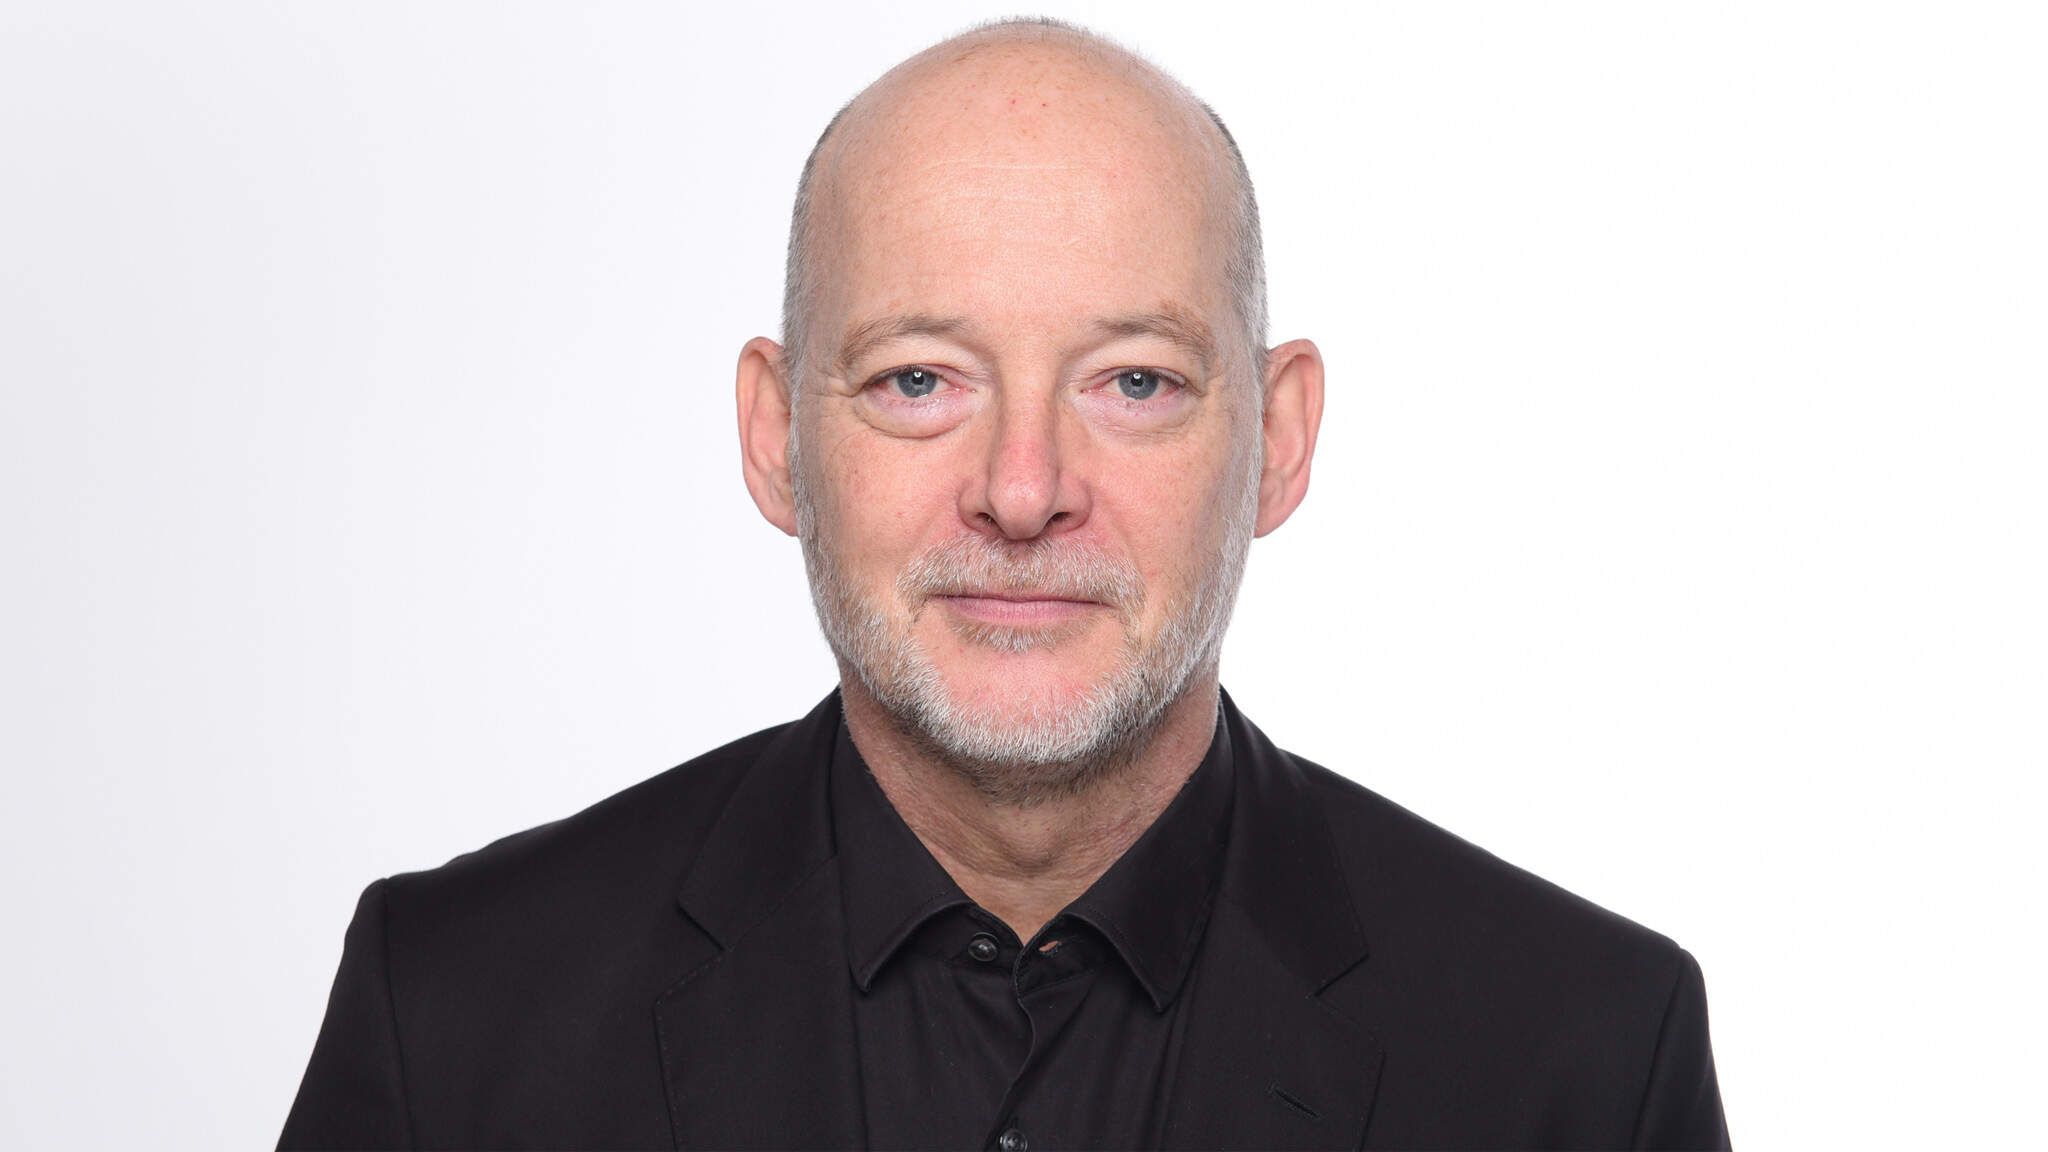 DACHSER appoints Ralf Morawietz Corporate Director IT